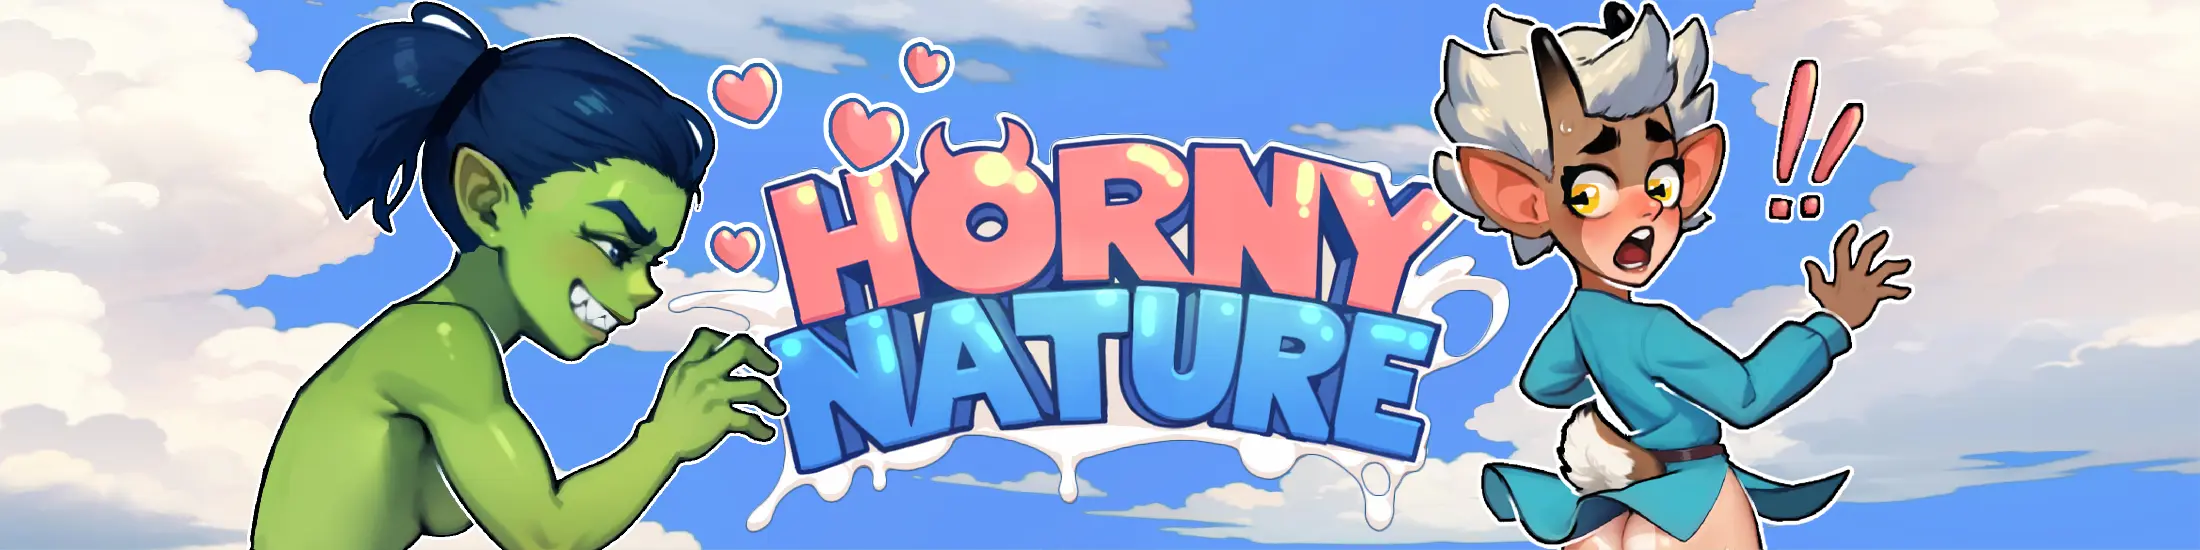 Horny Nature main image